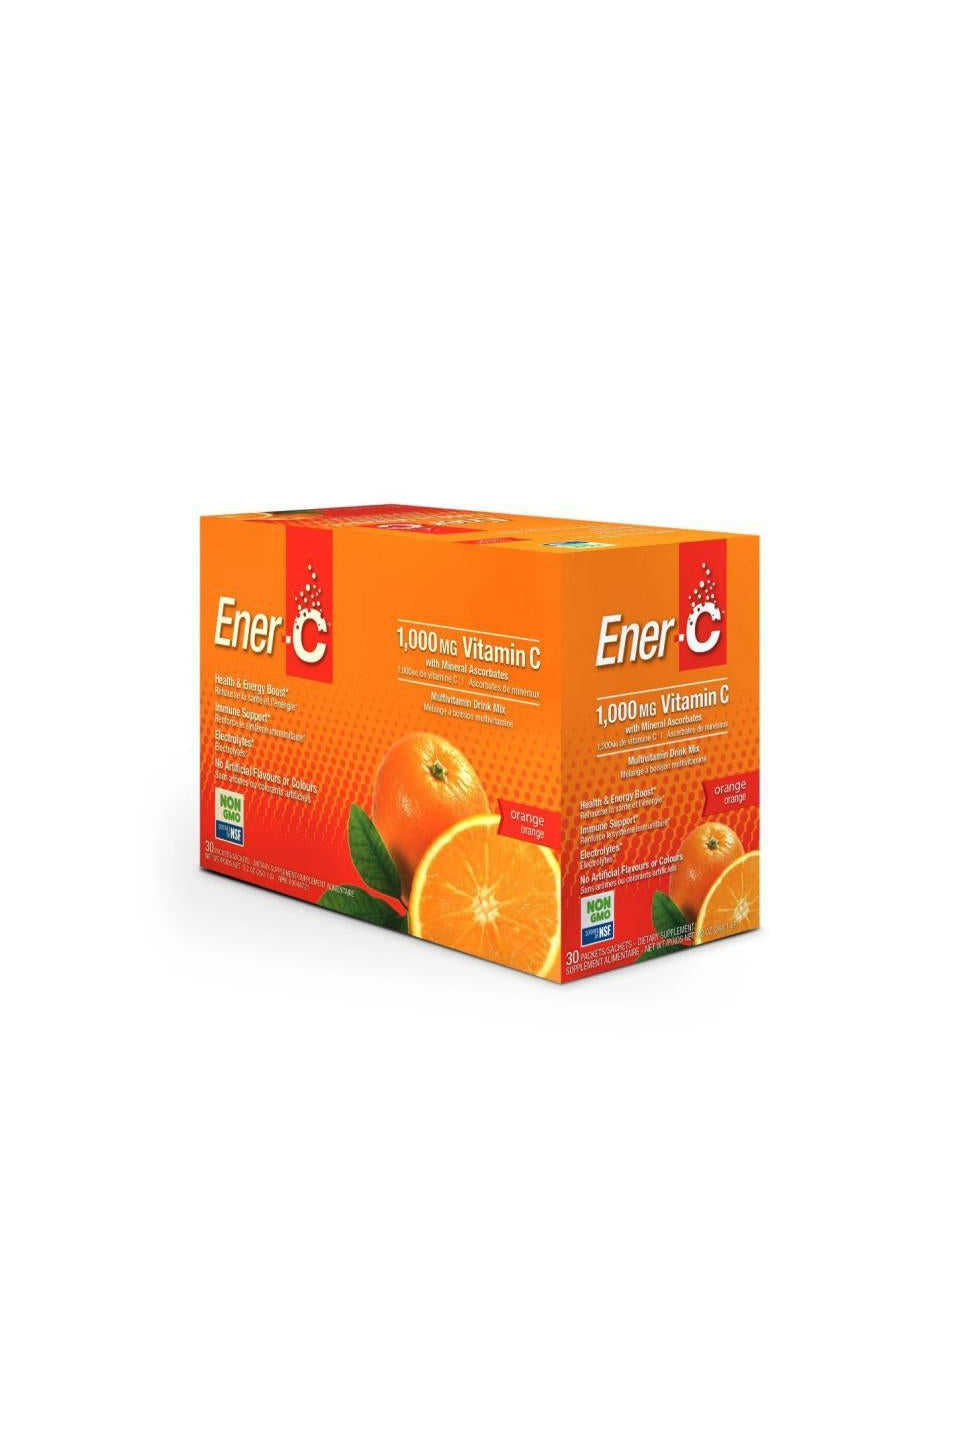 Ener-C Orange Multivitamin Drink Mix - 1,000mg Vitamin C (Case of 30)